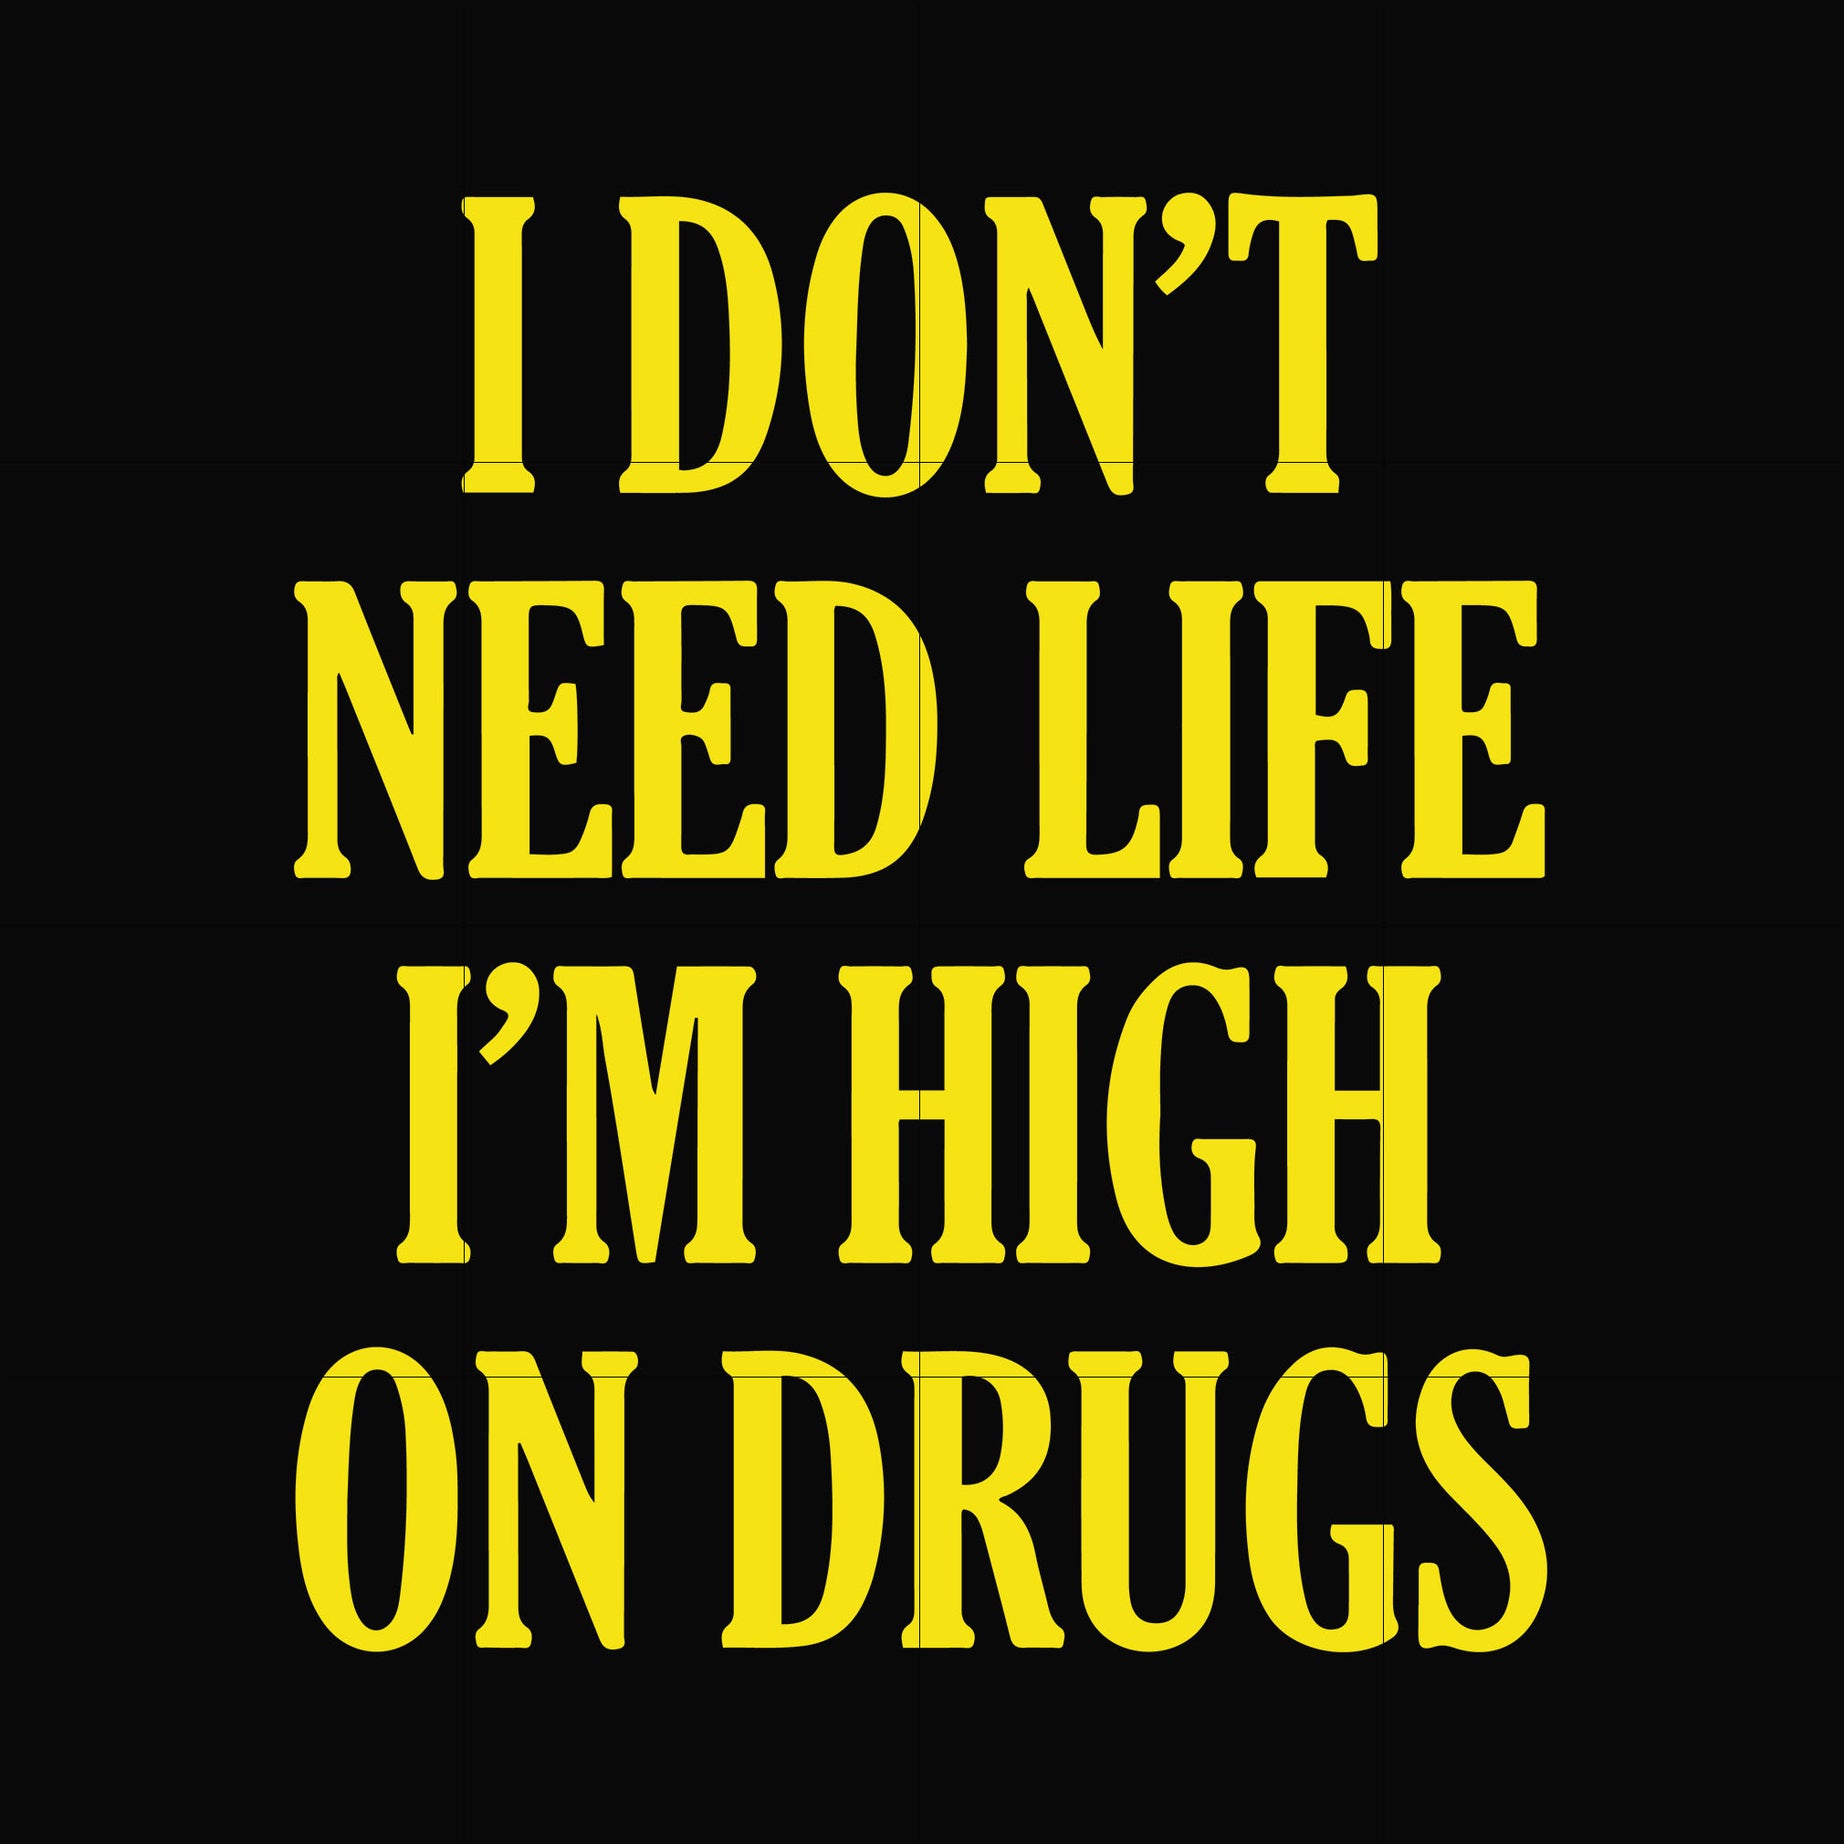 I don't need life i'm high on drugs svg, png, dxf, eps digital file OTH0026